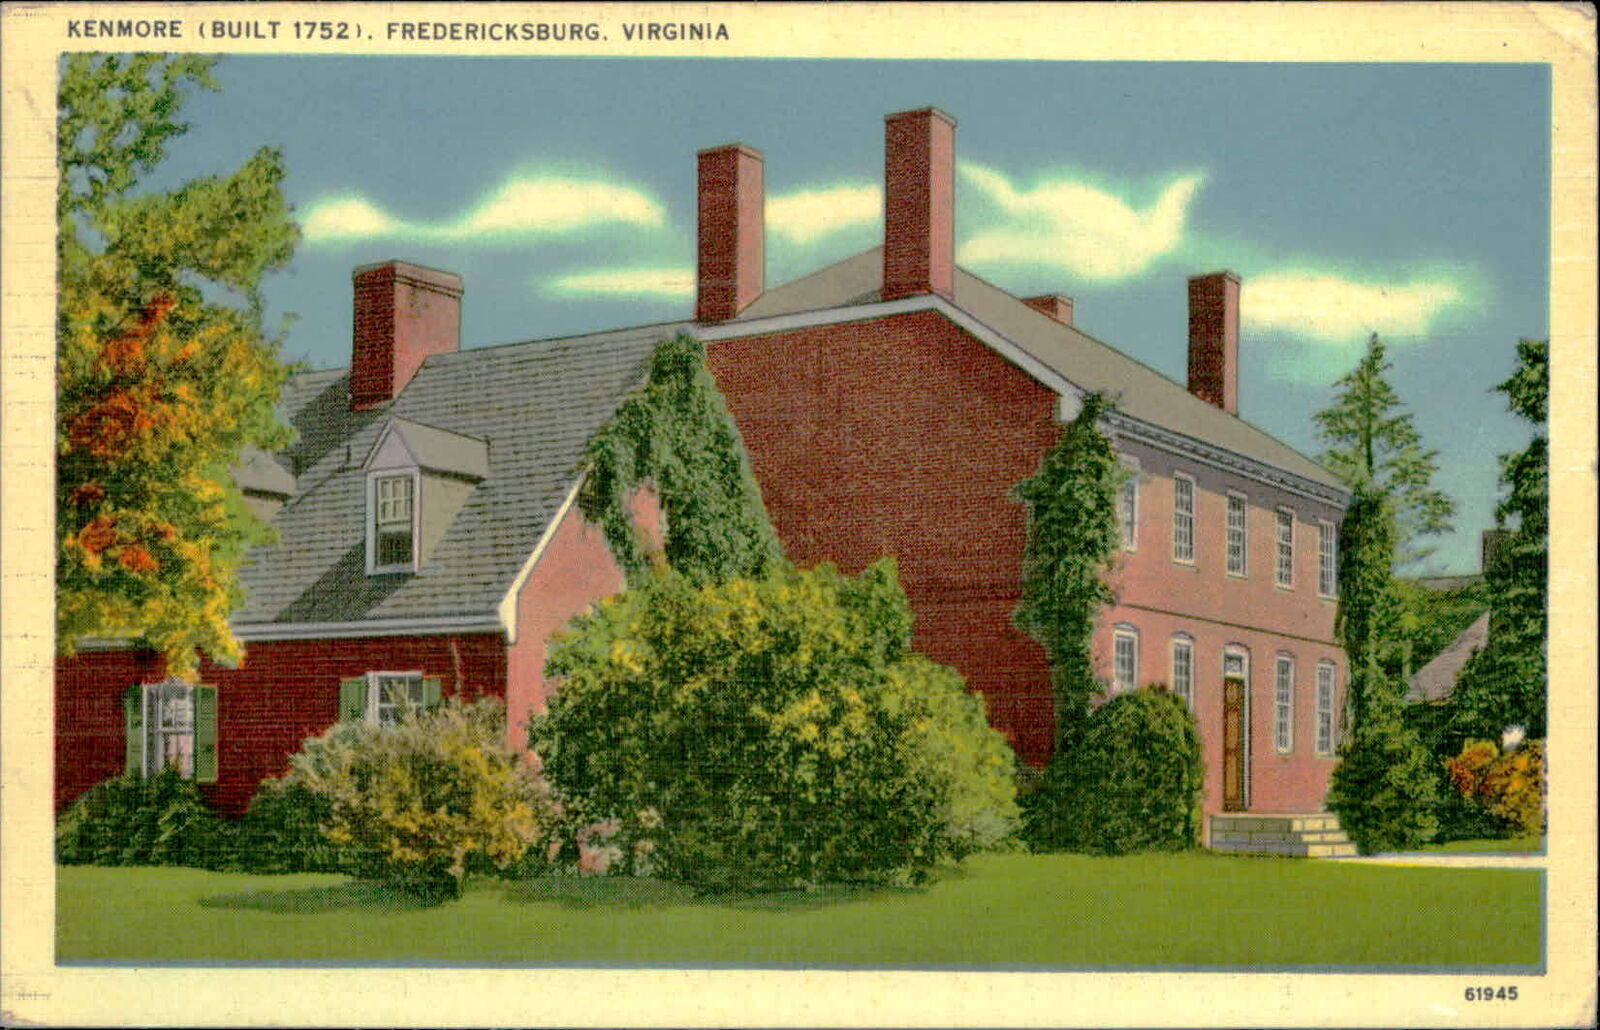 Postcard: KENMORE (BUILT 1752). FREDERICKSBURG, VIRGINIA